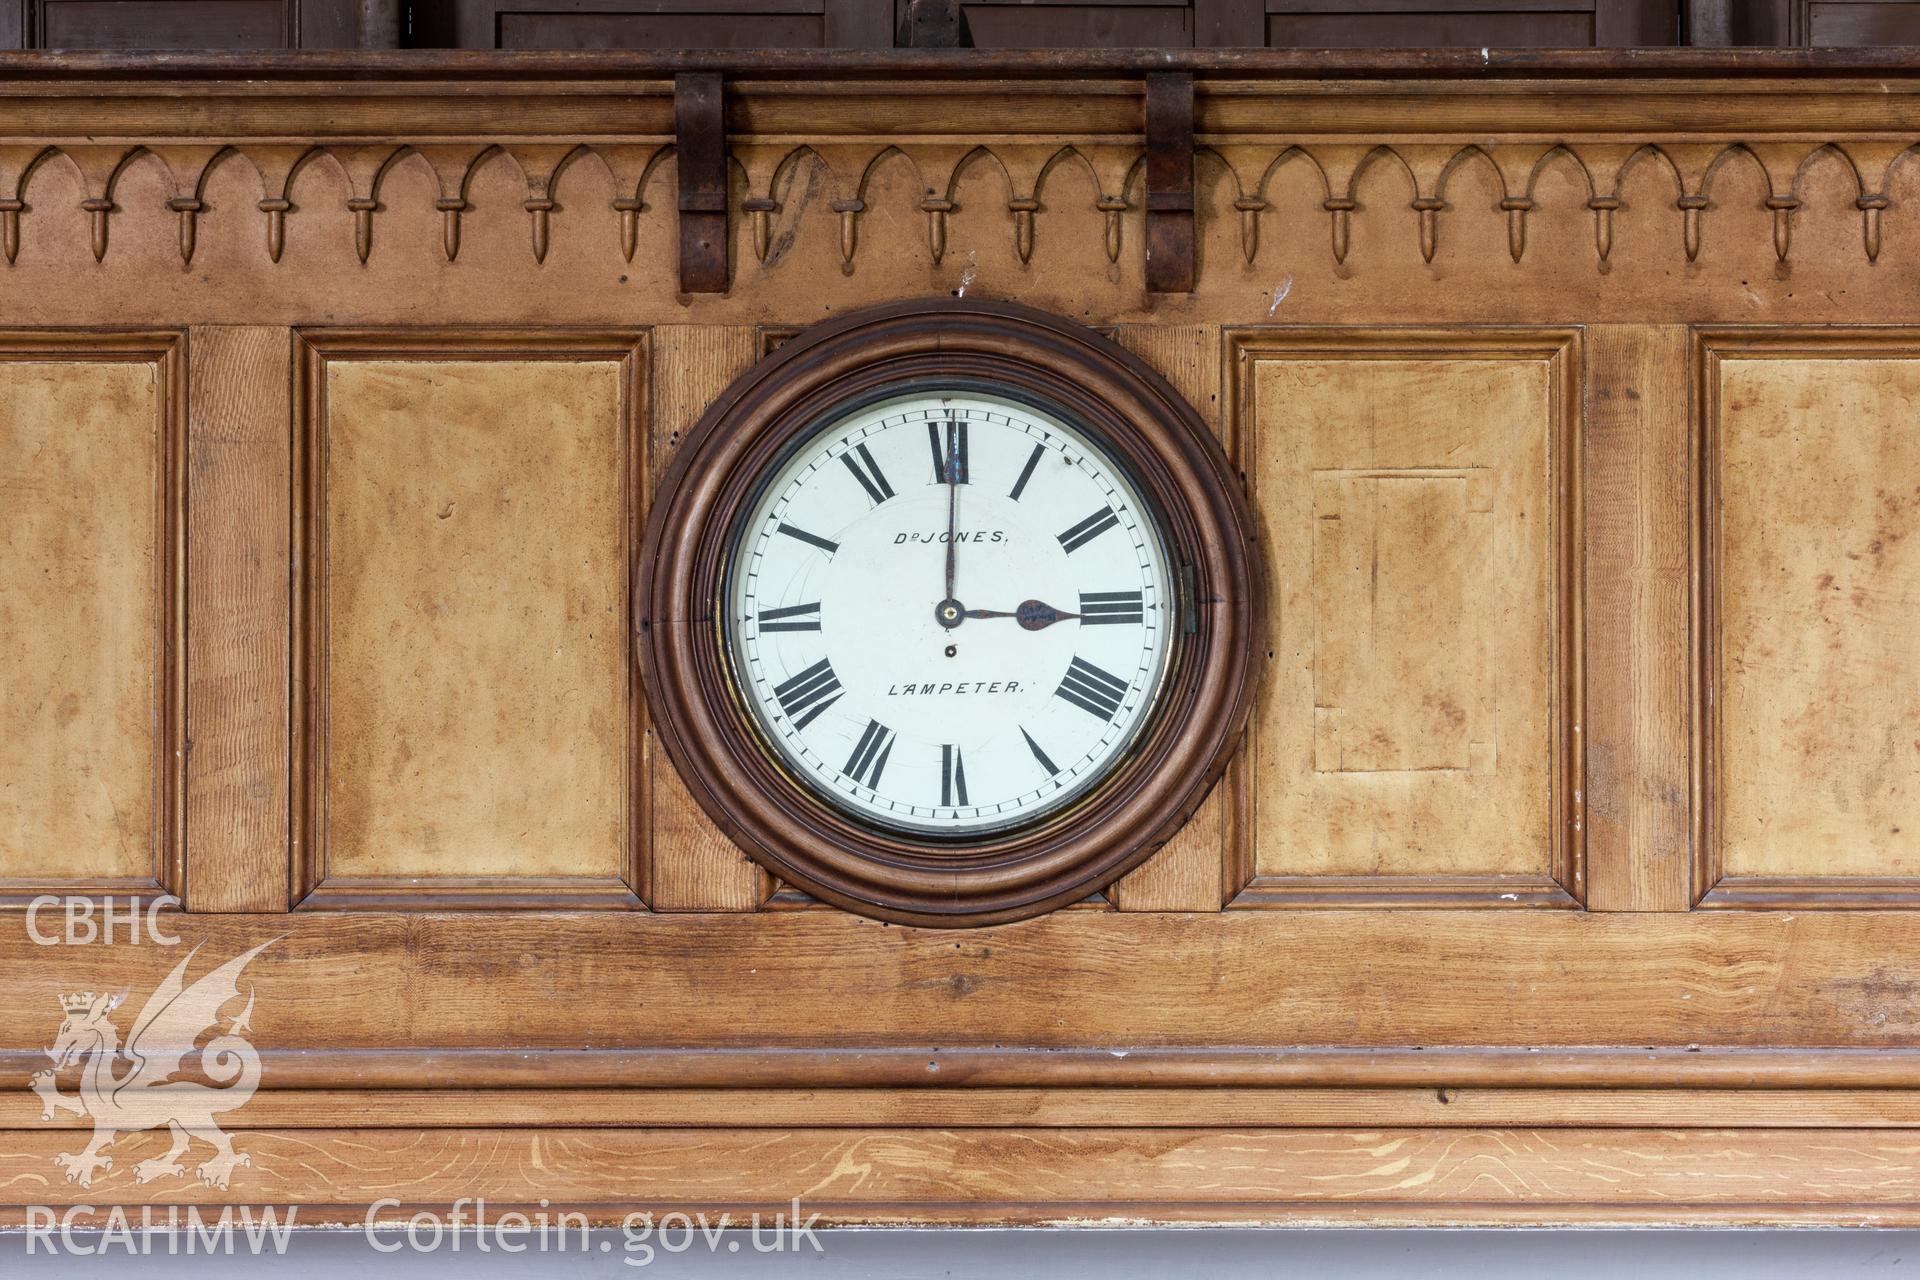 Detail of gallery clock